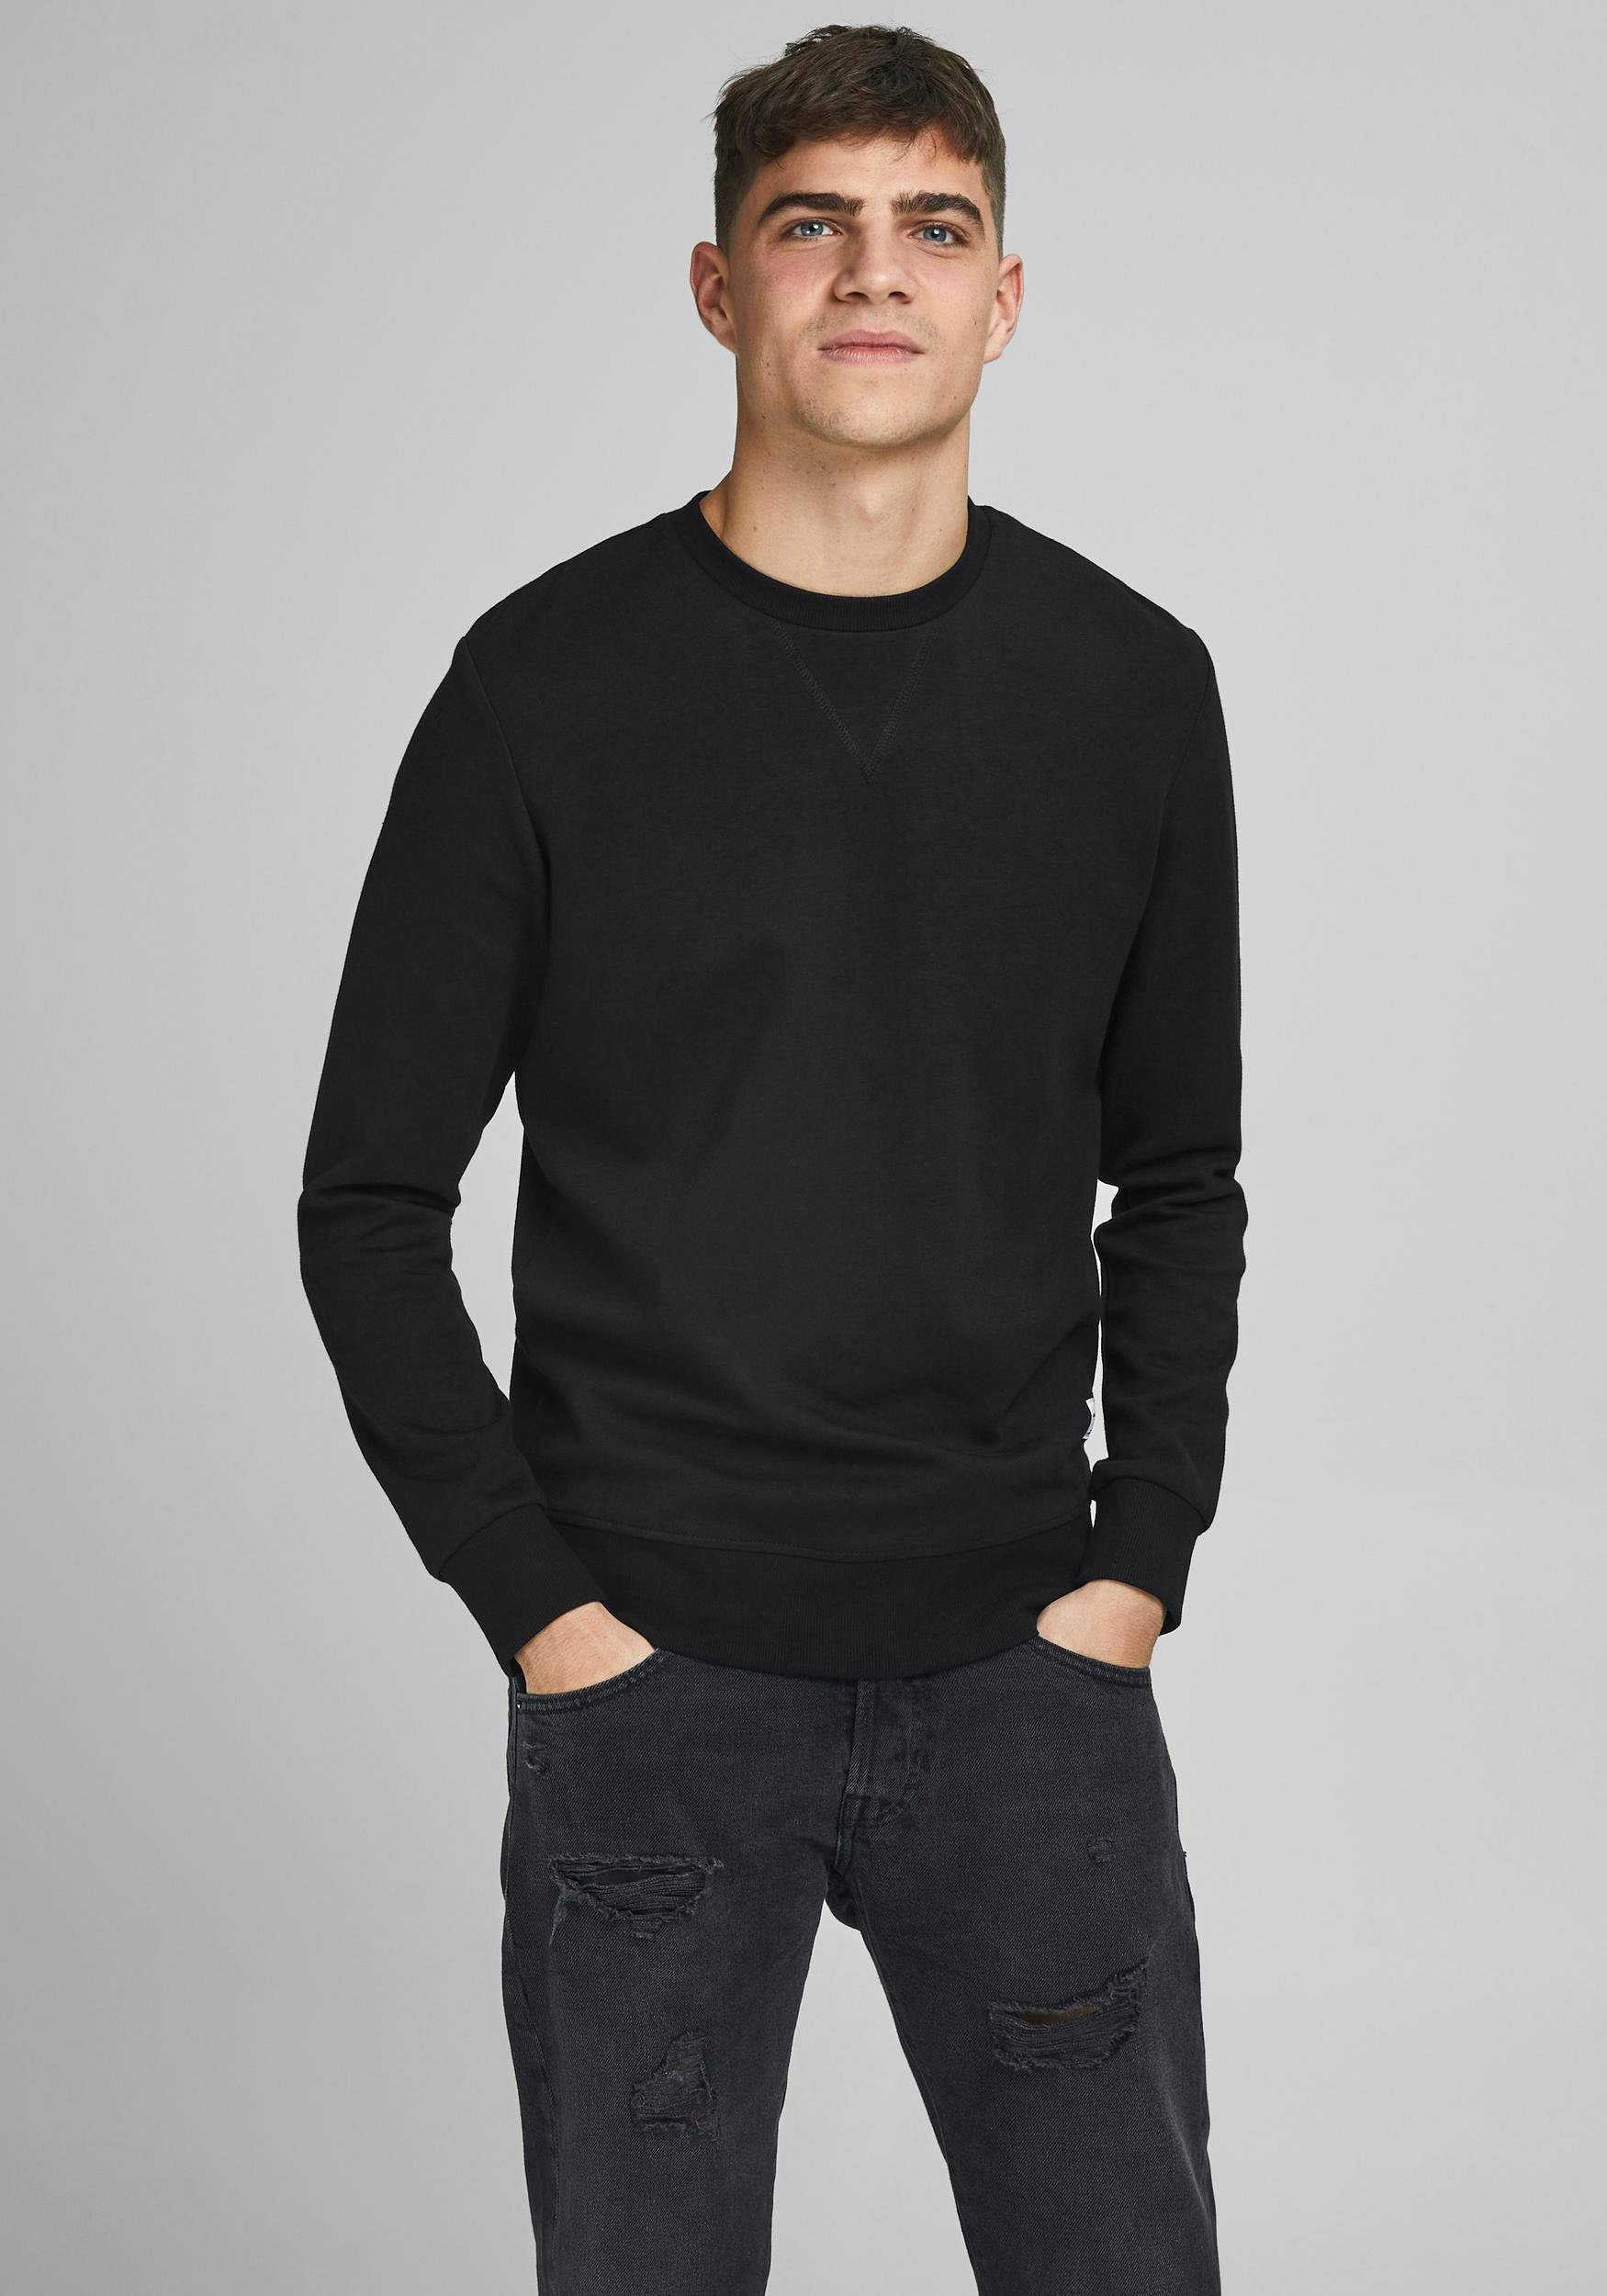 Jack schwarz & BASIC Sweatshirt Jones SWEAT